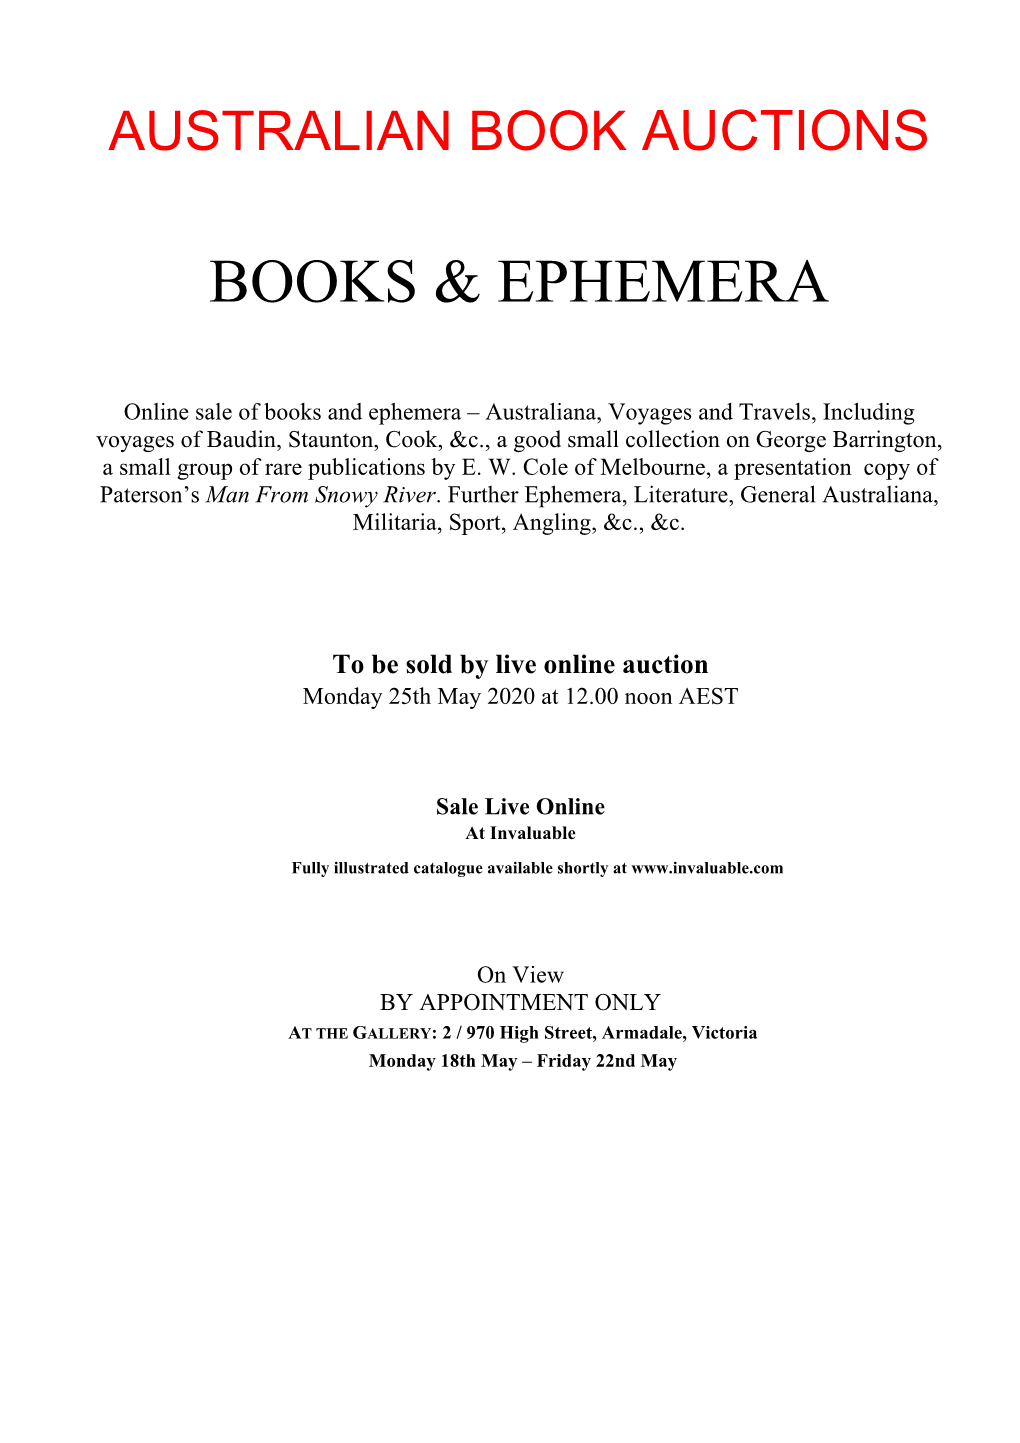 Books & Ephemera